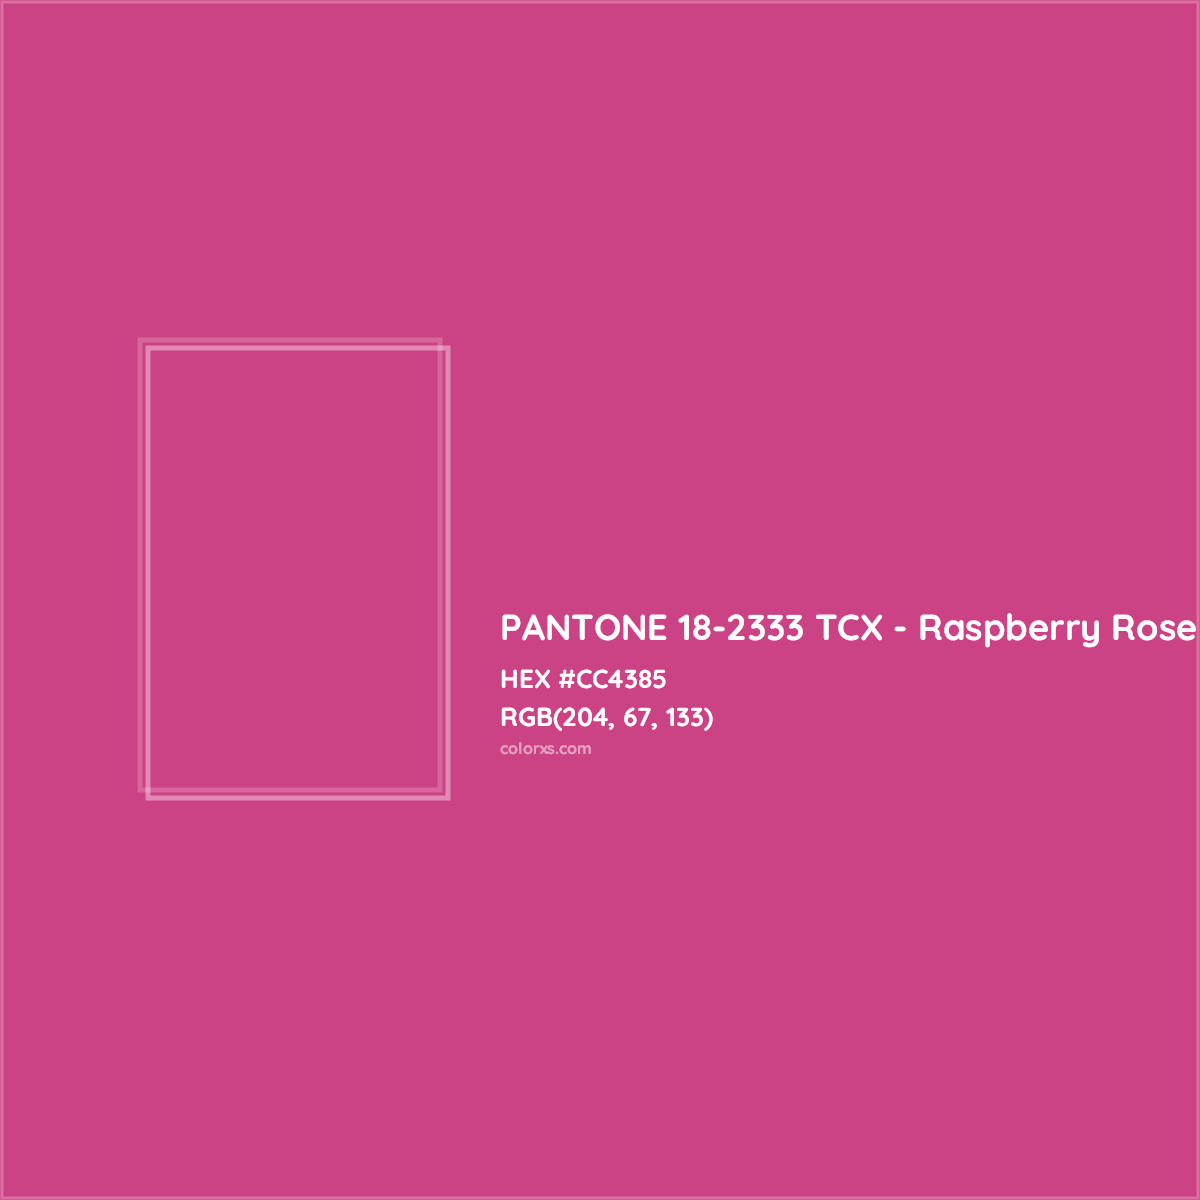 HEX #CC4385 PANTONE 18-2333 TCX - Raspberry Rose CMS Pantone TCX - Color Code